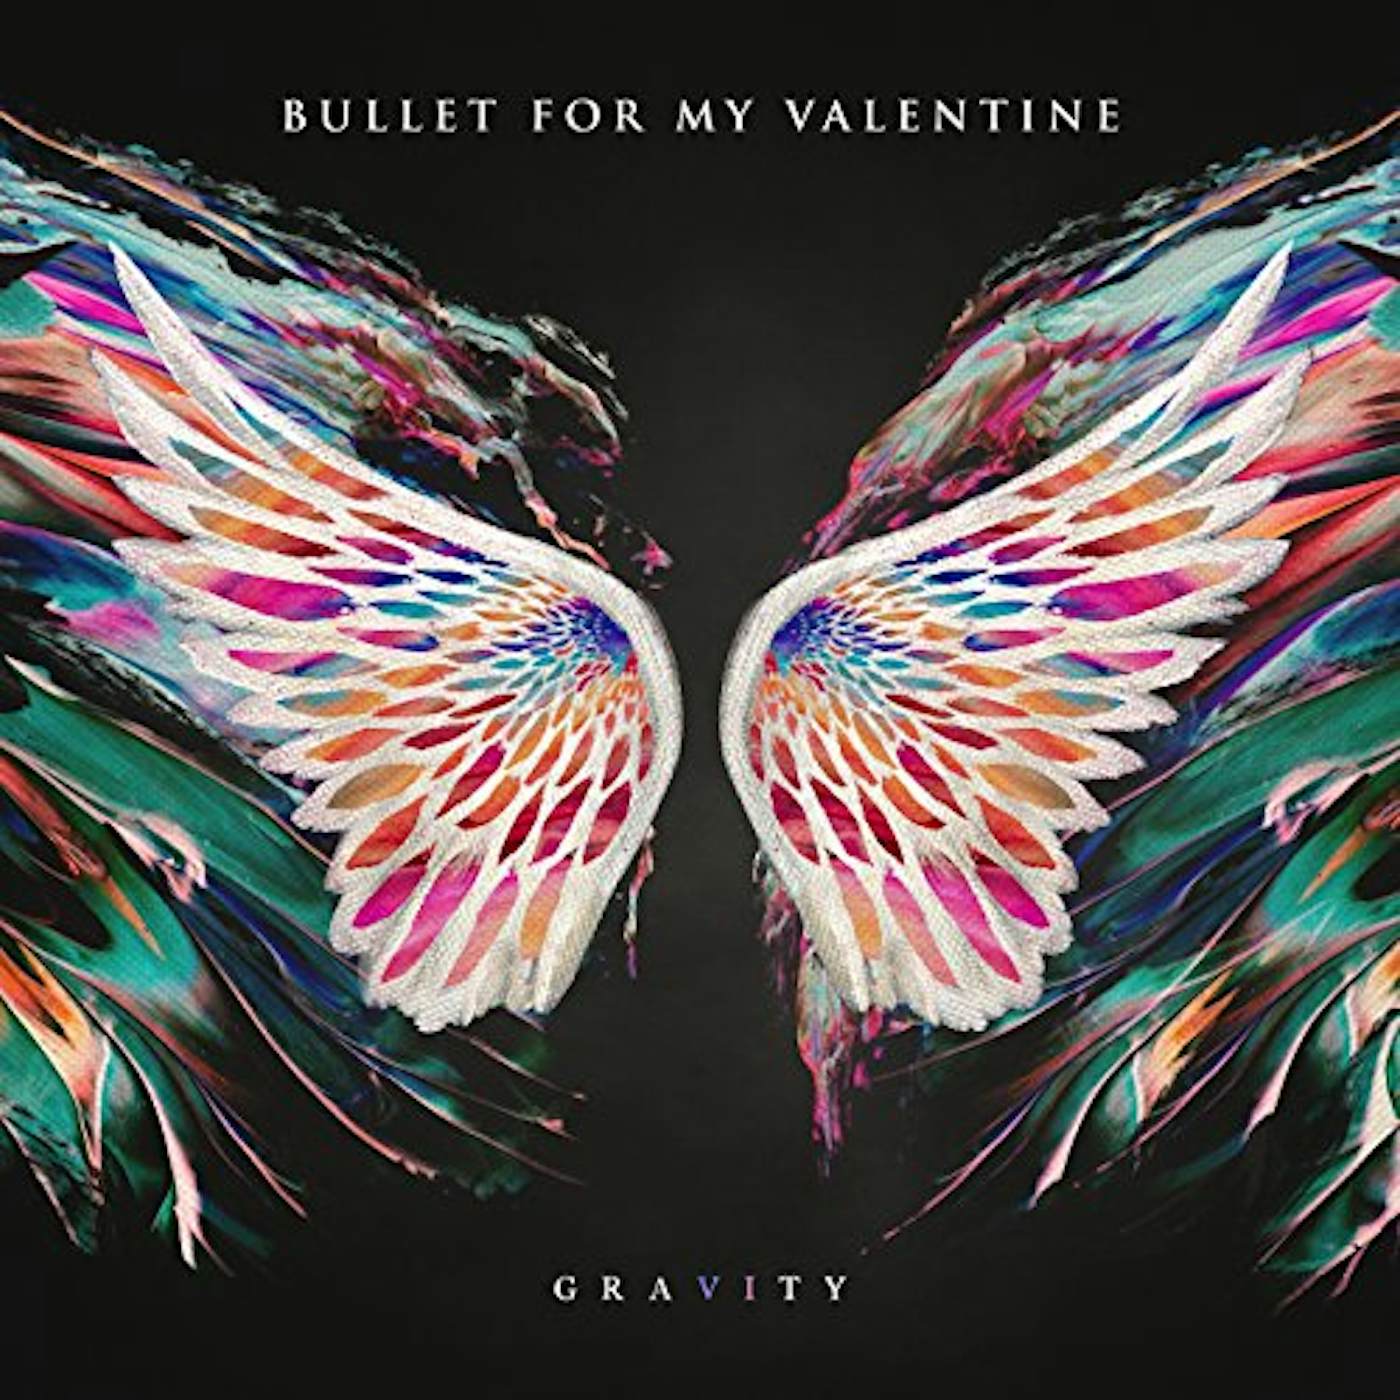 Bullet For My Valentine Gravity (180G) Vinyl Record